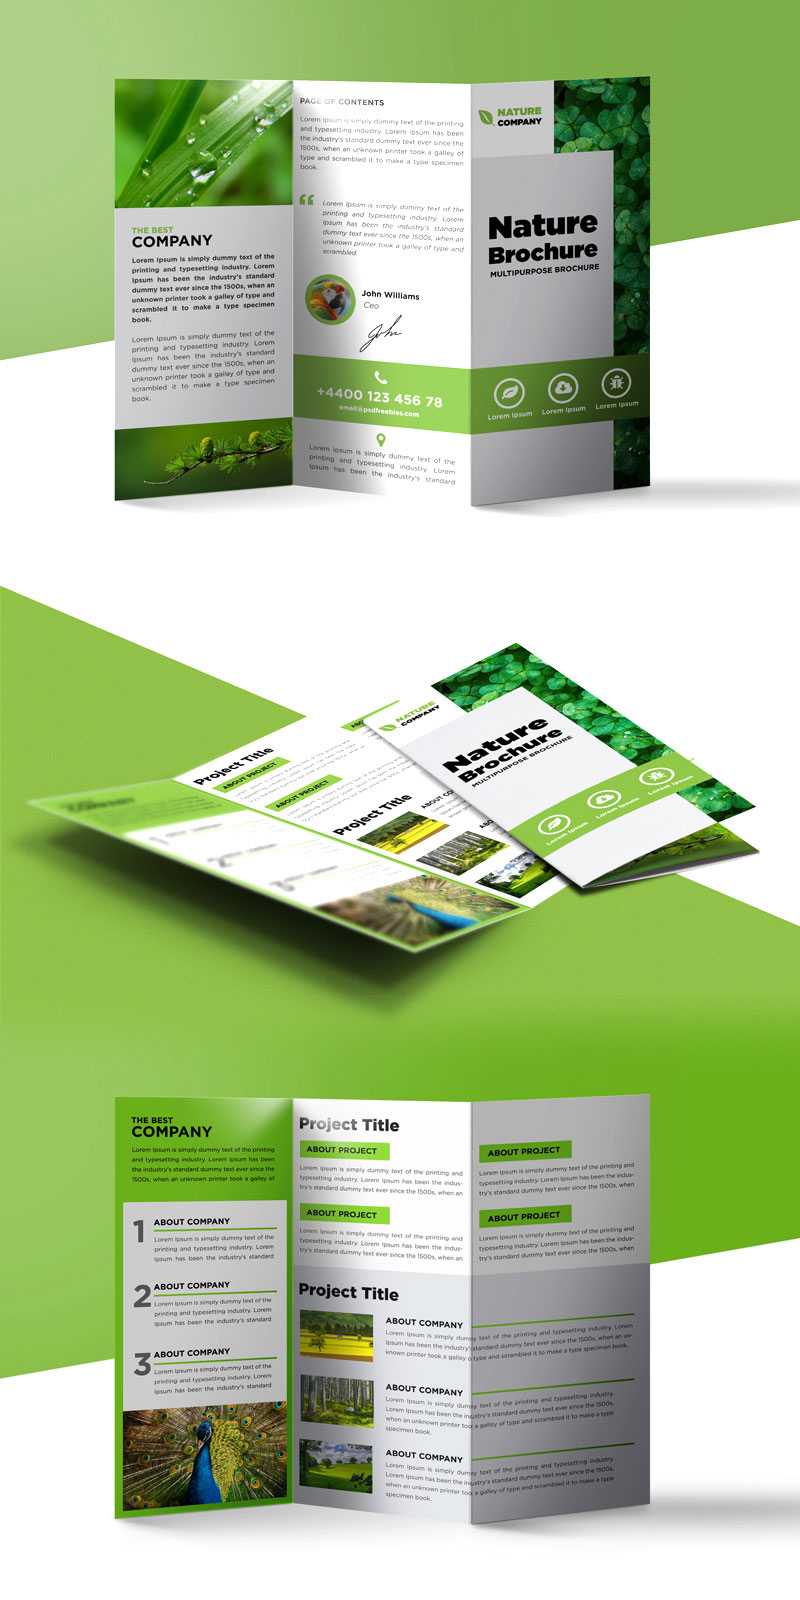 Nature Tri Fold Brochure Template Free Psd | Psdfreebies Throughout Free Three Fold Brochure Template